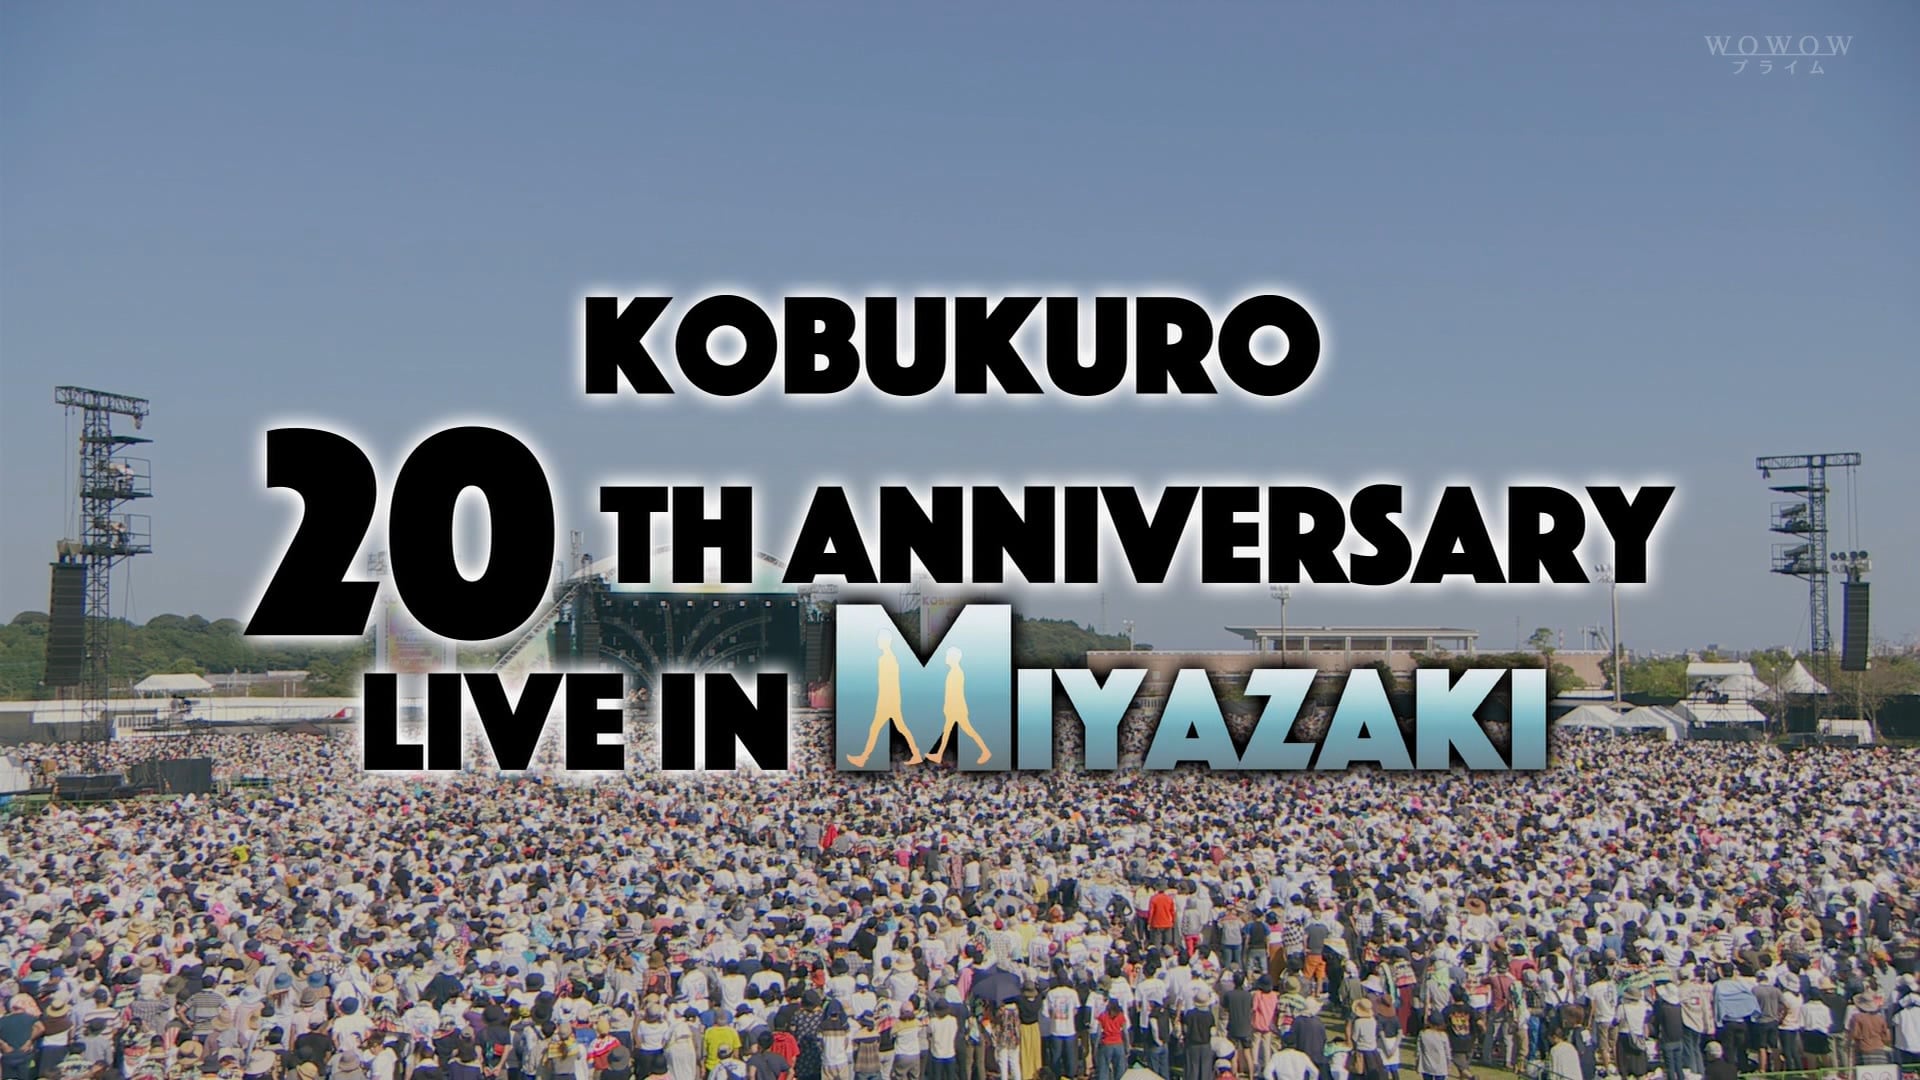 KOBUKURO 20TH ANNIVERSARY LIVE IN MIYAZAKI (DVD)　(shin